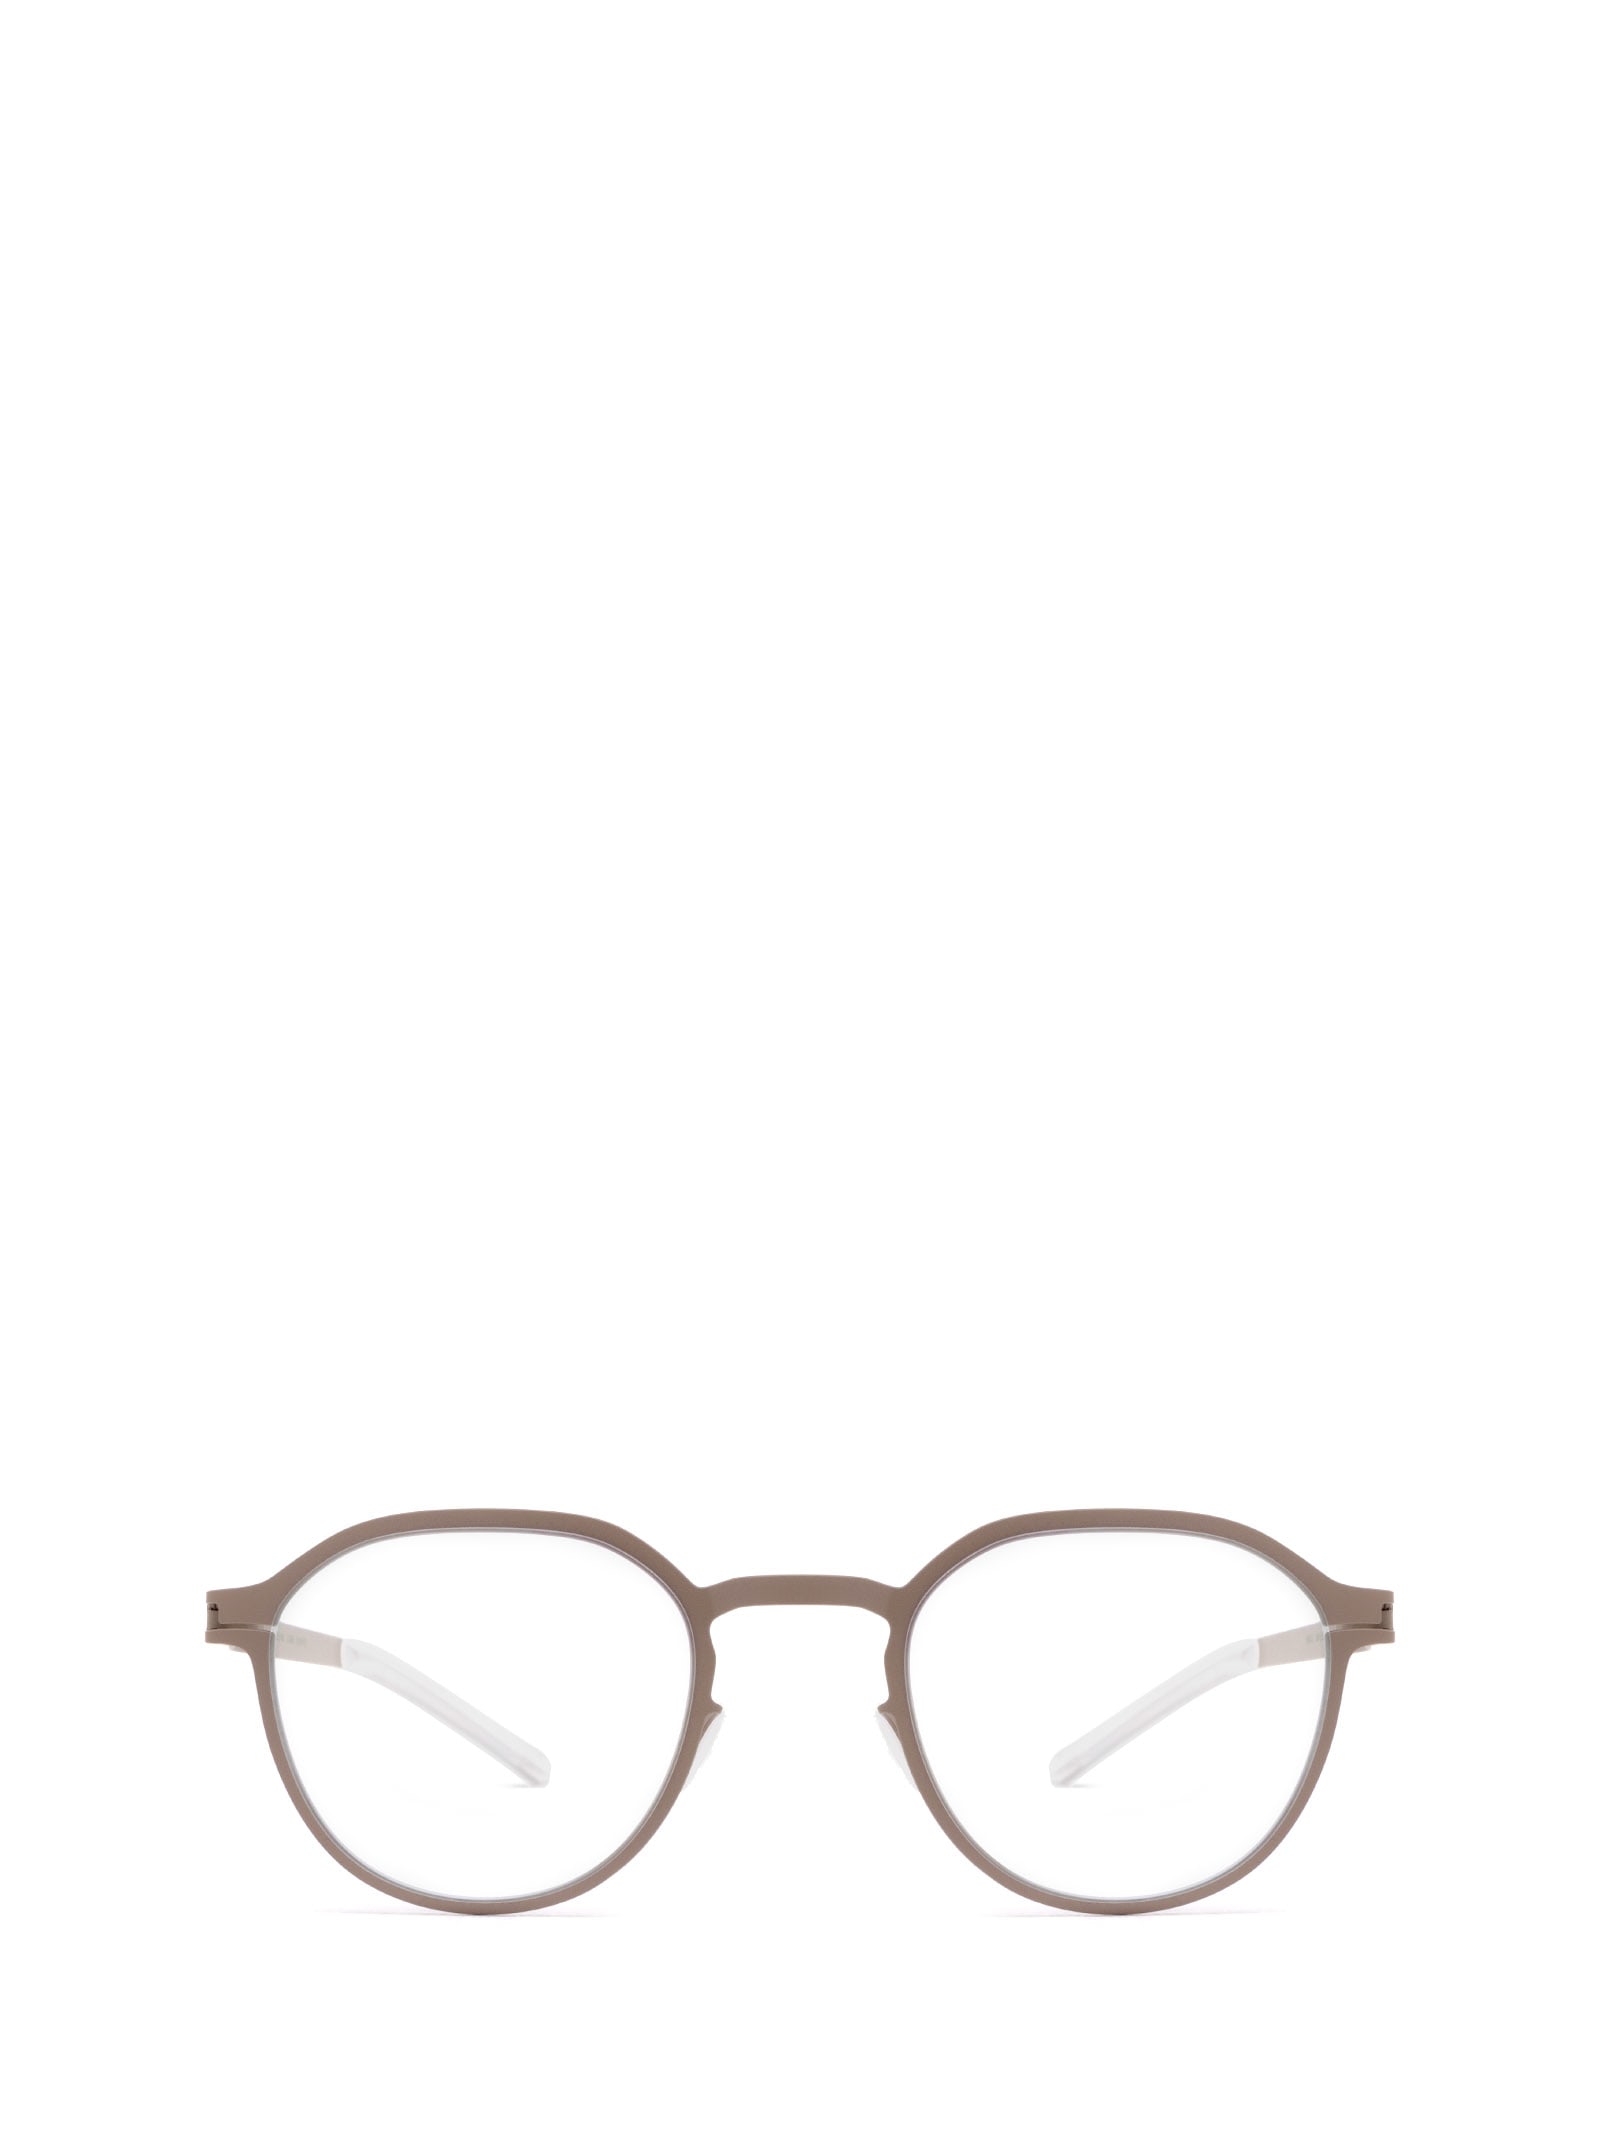 Ellington Greige Glasses